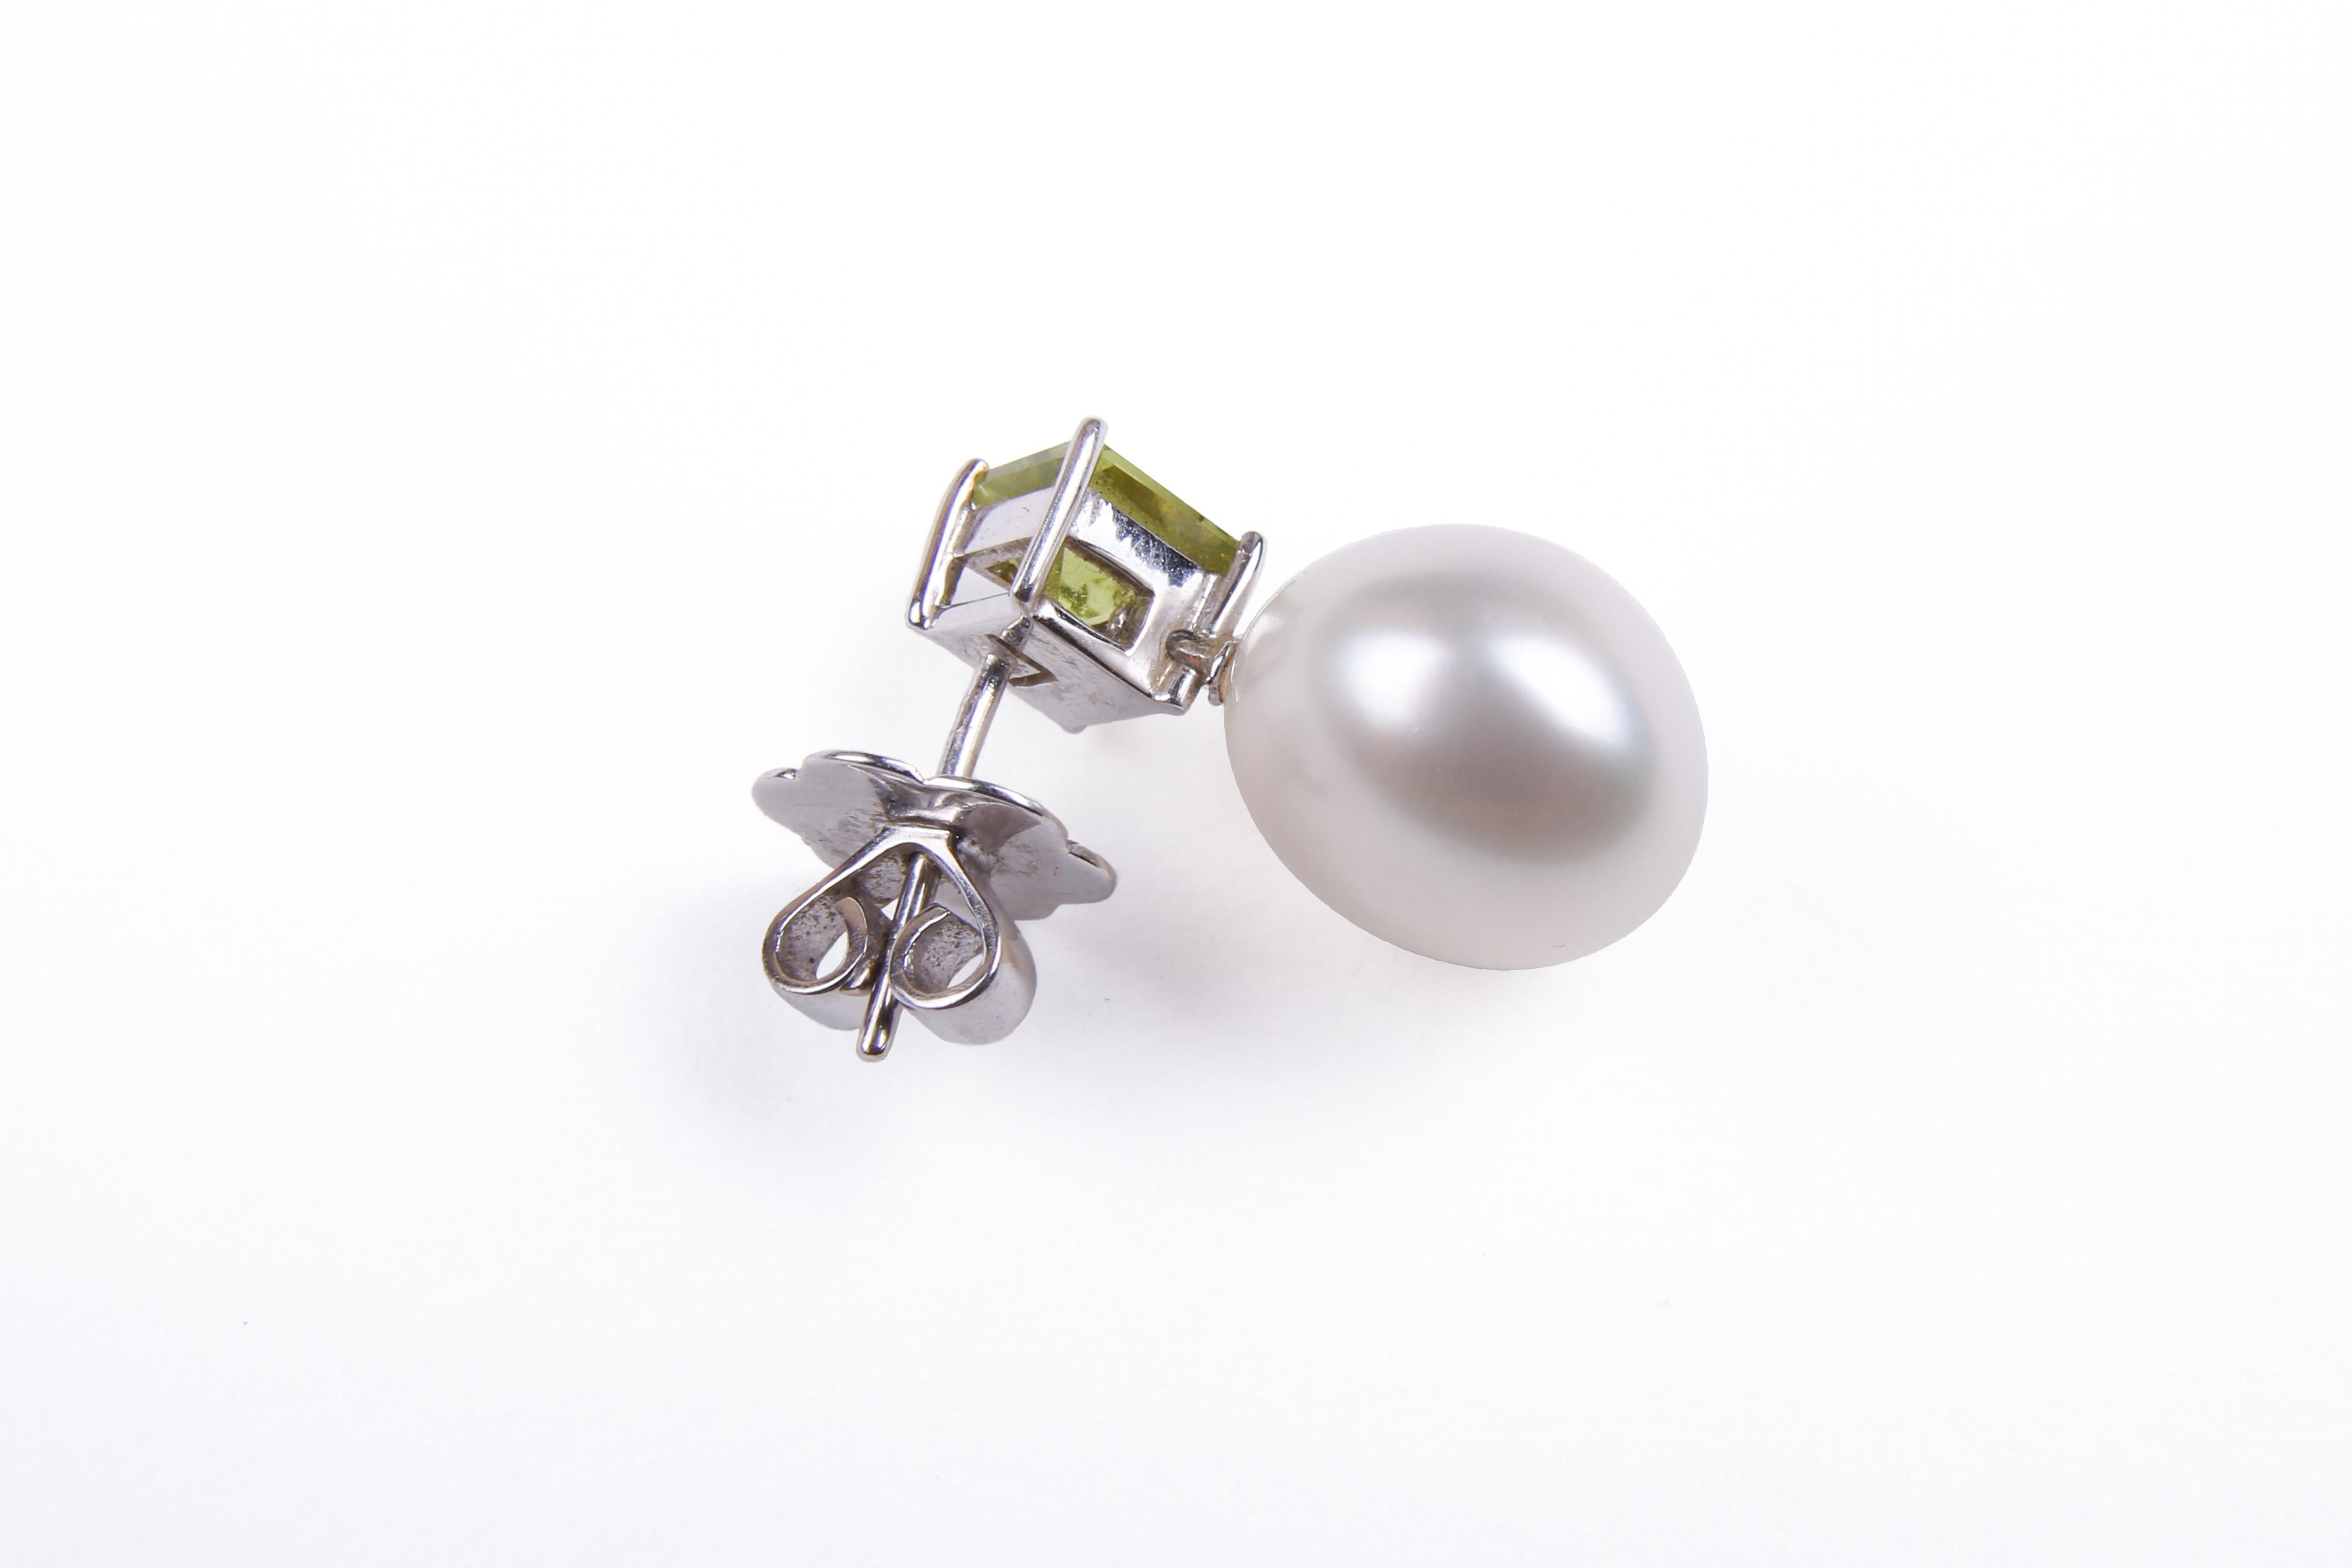 Autore White Gold, South Sea Pearl, Diamond, Peridot Pendant and Earrings Set 10